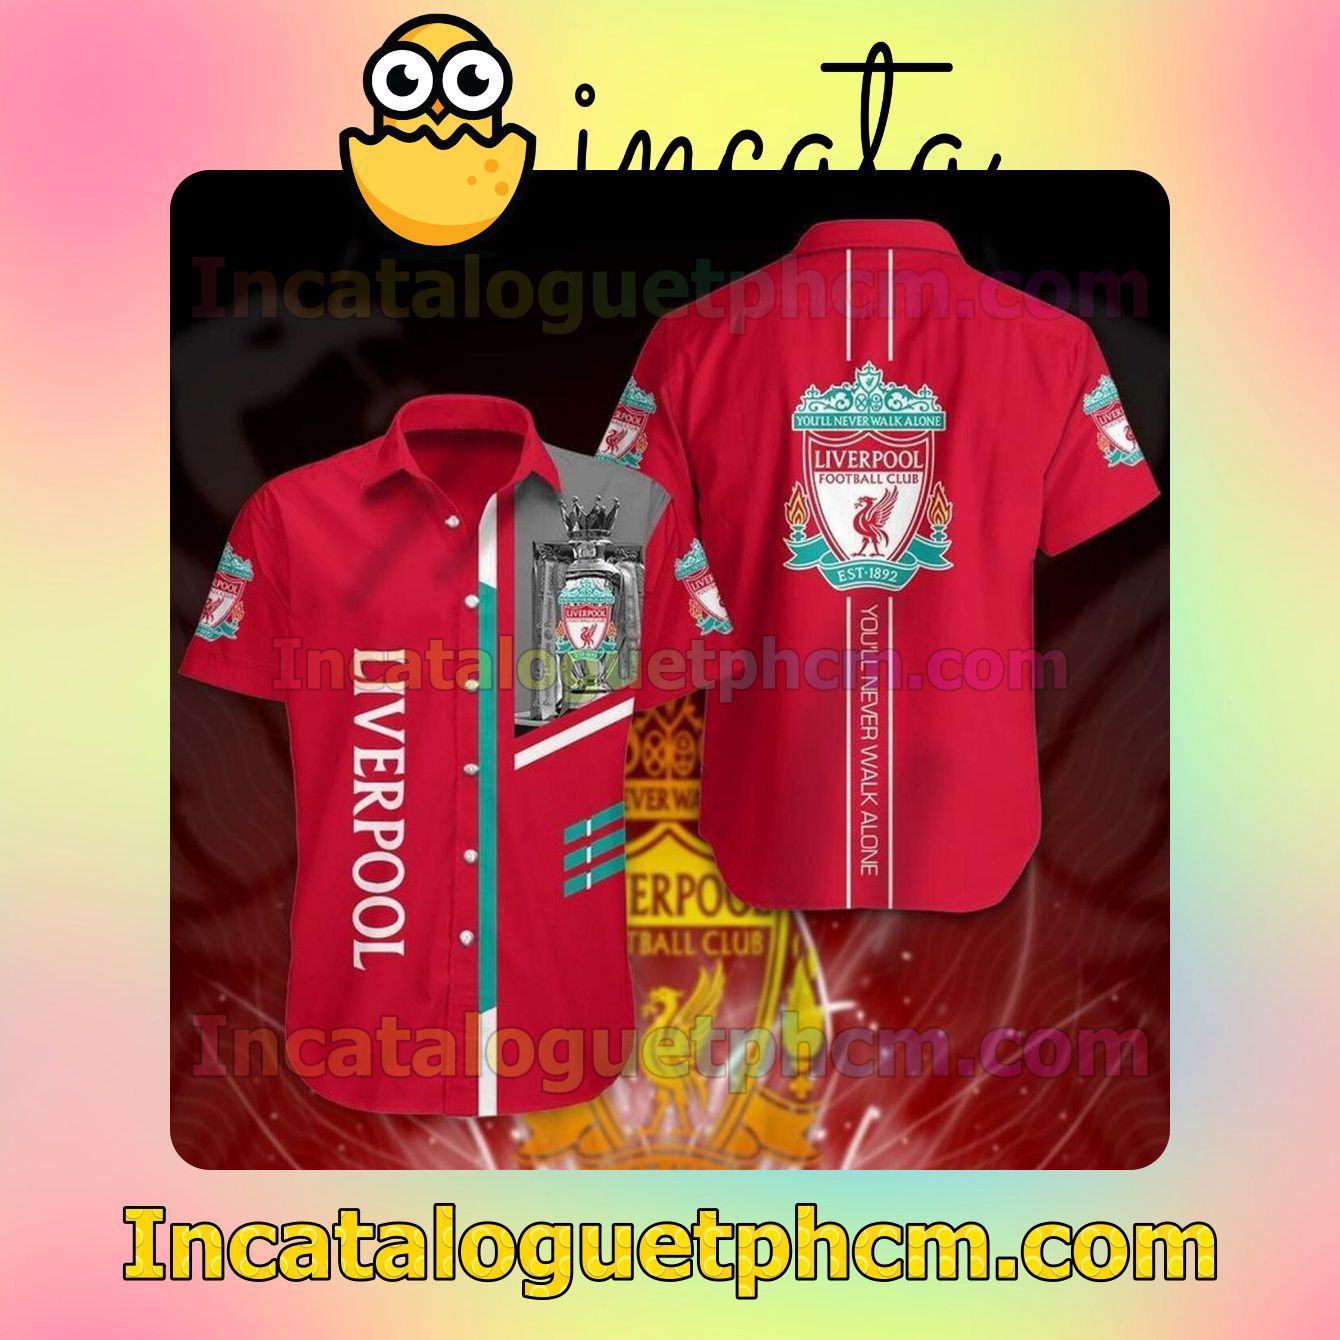 Liverpool Football Club Ét 1892 You'll Never Walk Alone Red Custom Short Sleeve Shirt